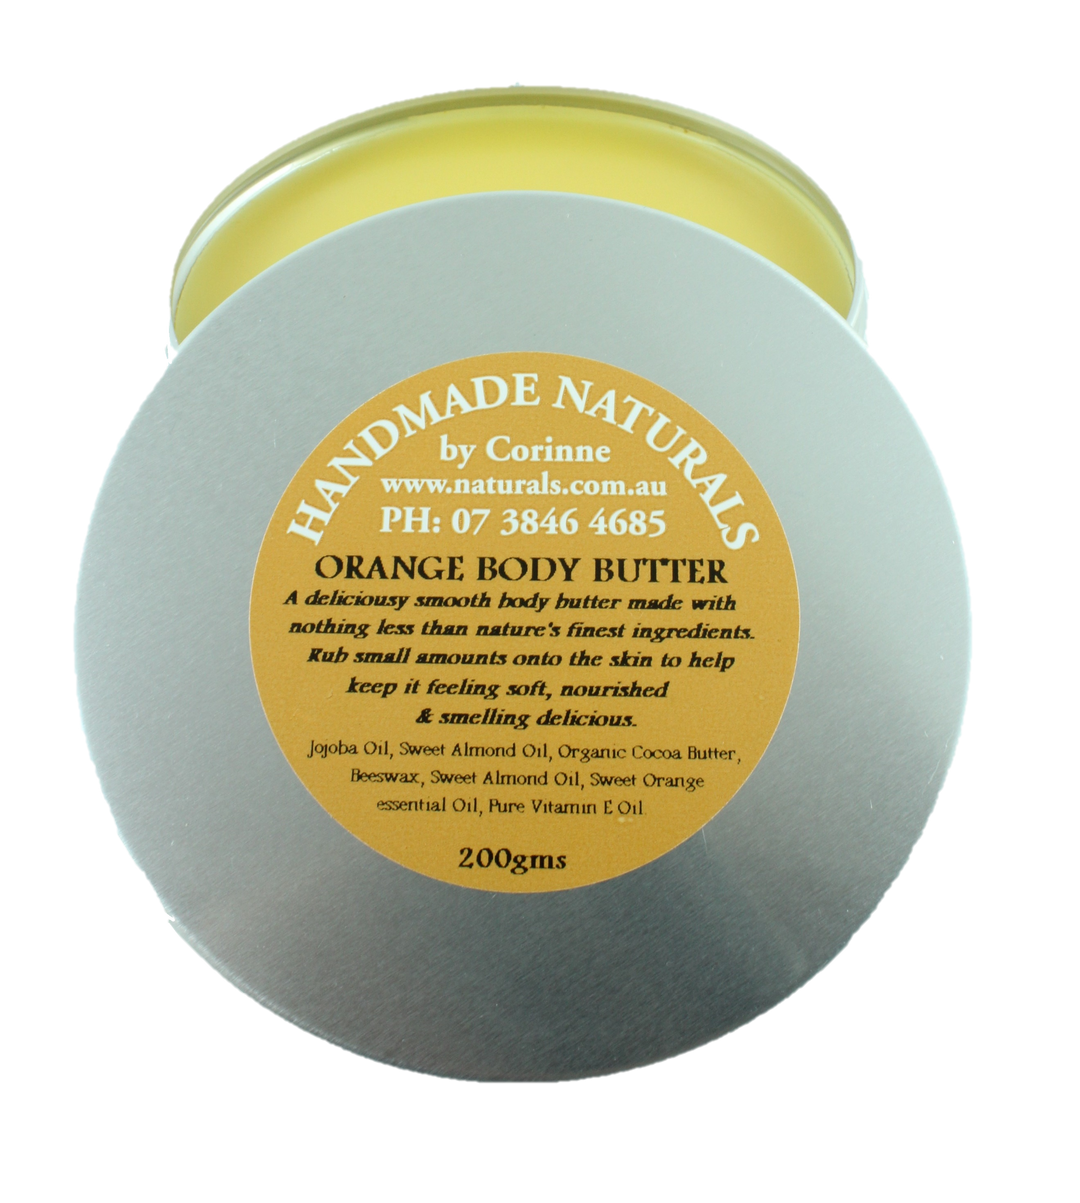 Body Butter ORANGE from Handmade Naturals